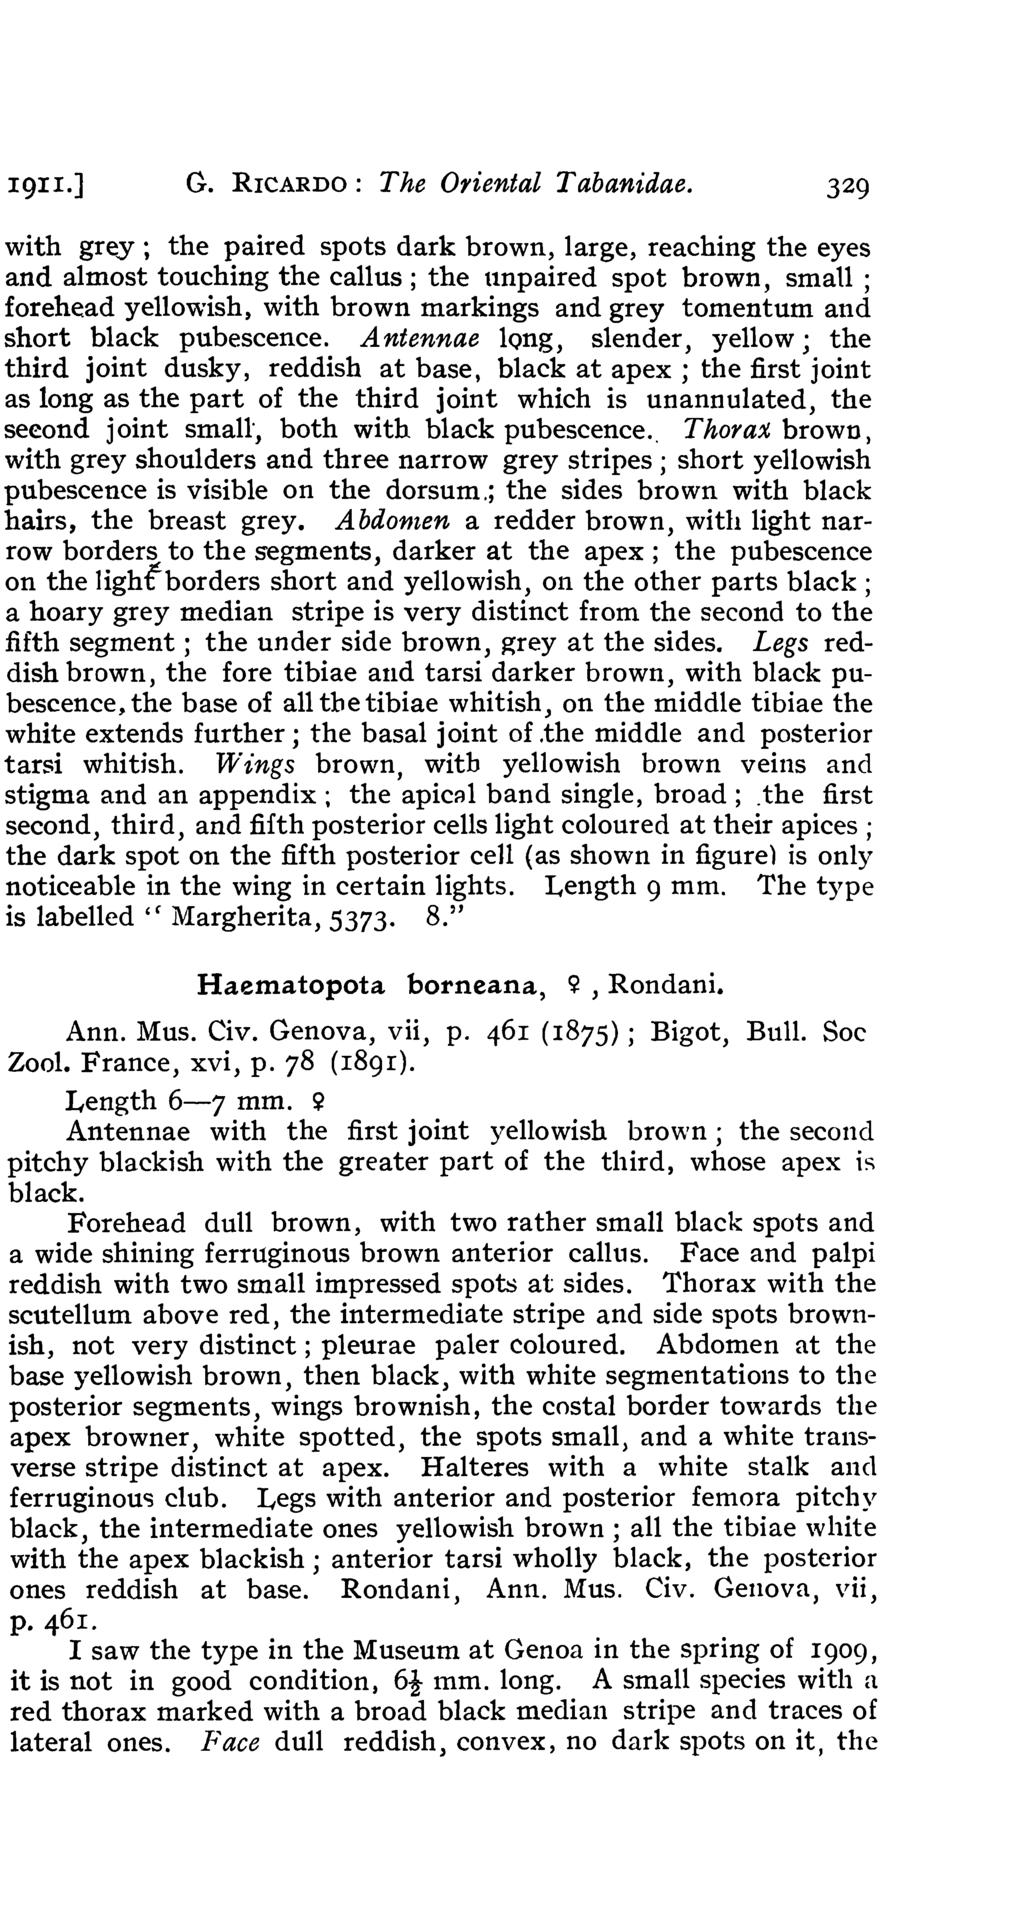 191 1.] G. RICARDO: The Oriental Tabanidae.